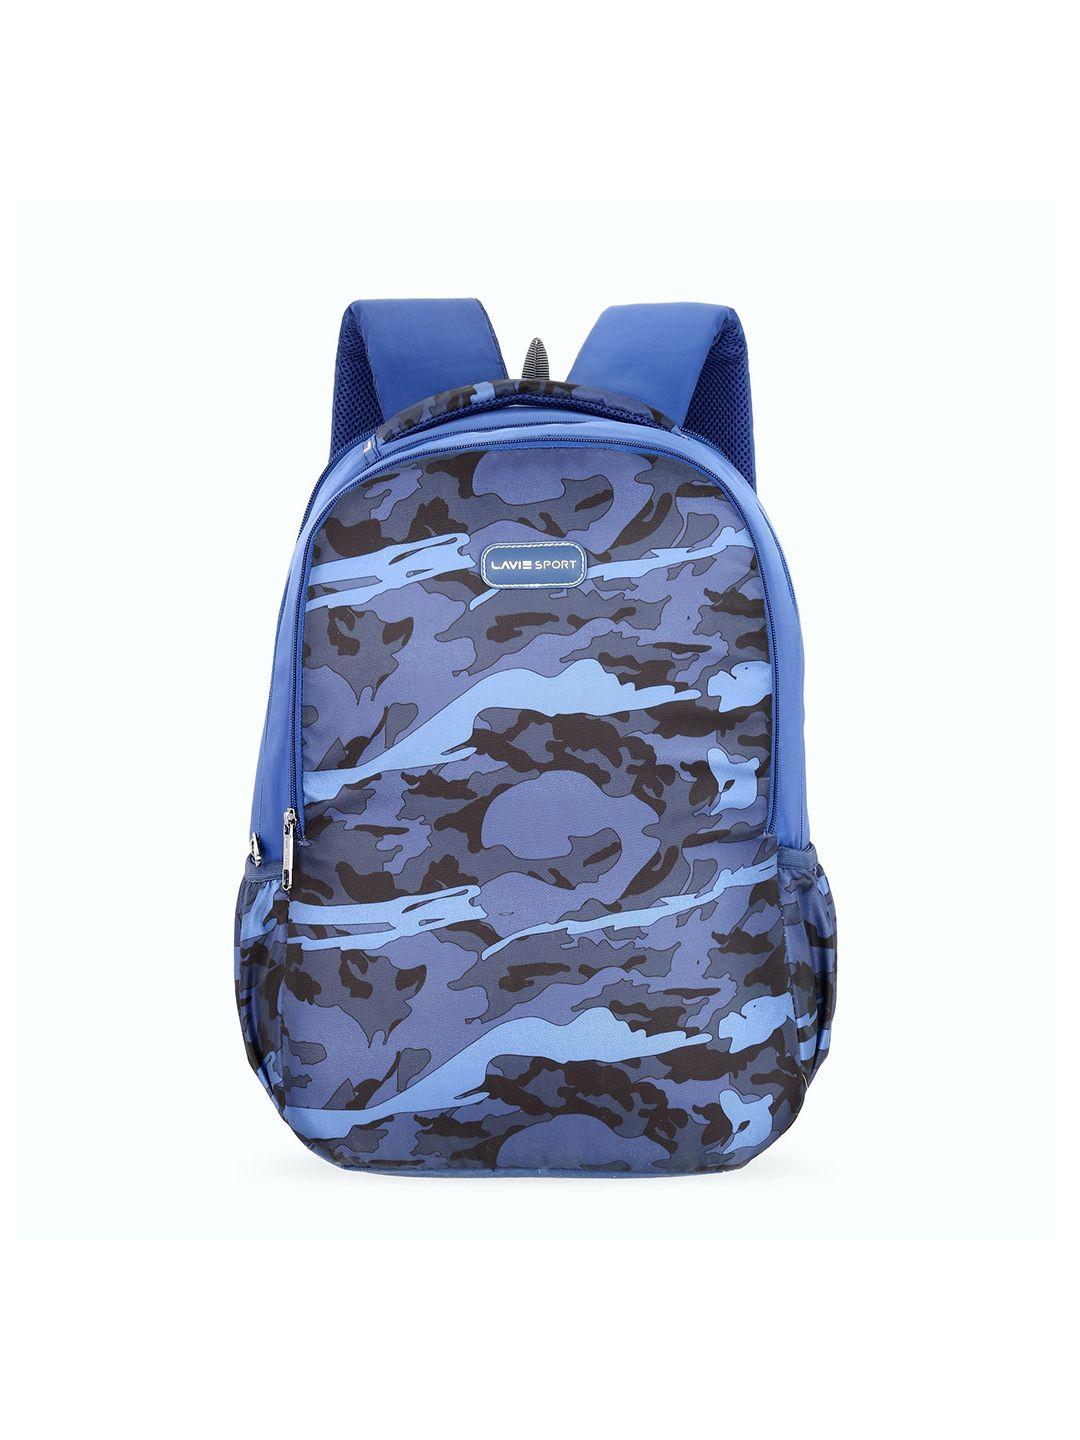 lavie sport unisex navy blue & black camouflage backpack